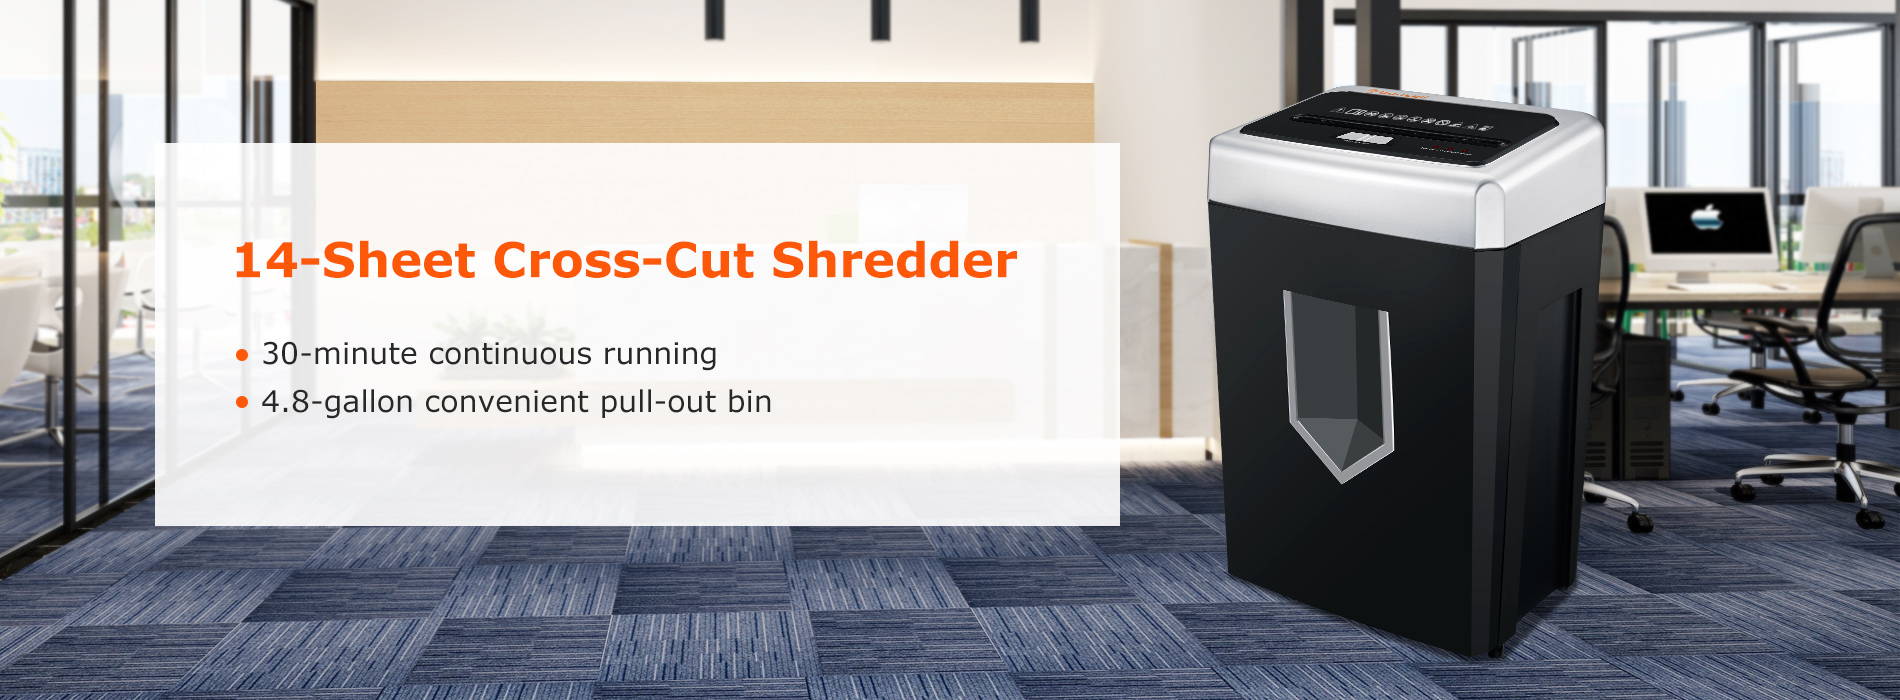 14-sheet cross-cut shredder- 30 minutes continuous running 4.8-gallon convenient pull-out bin